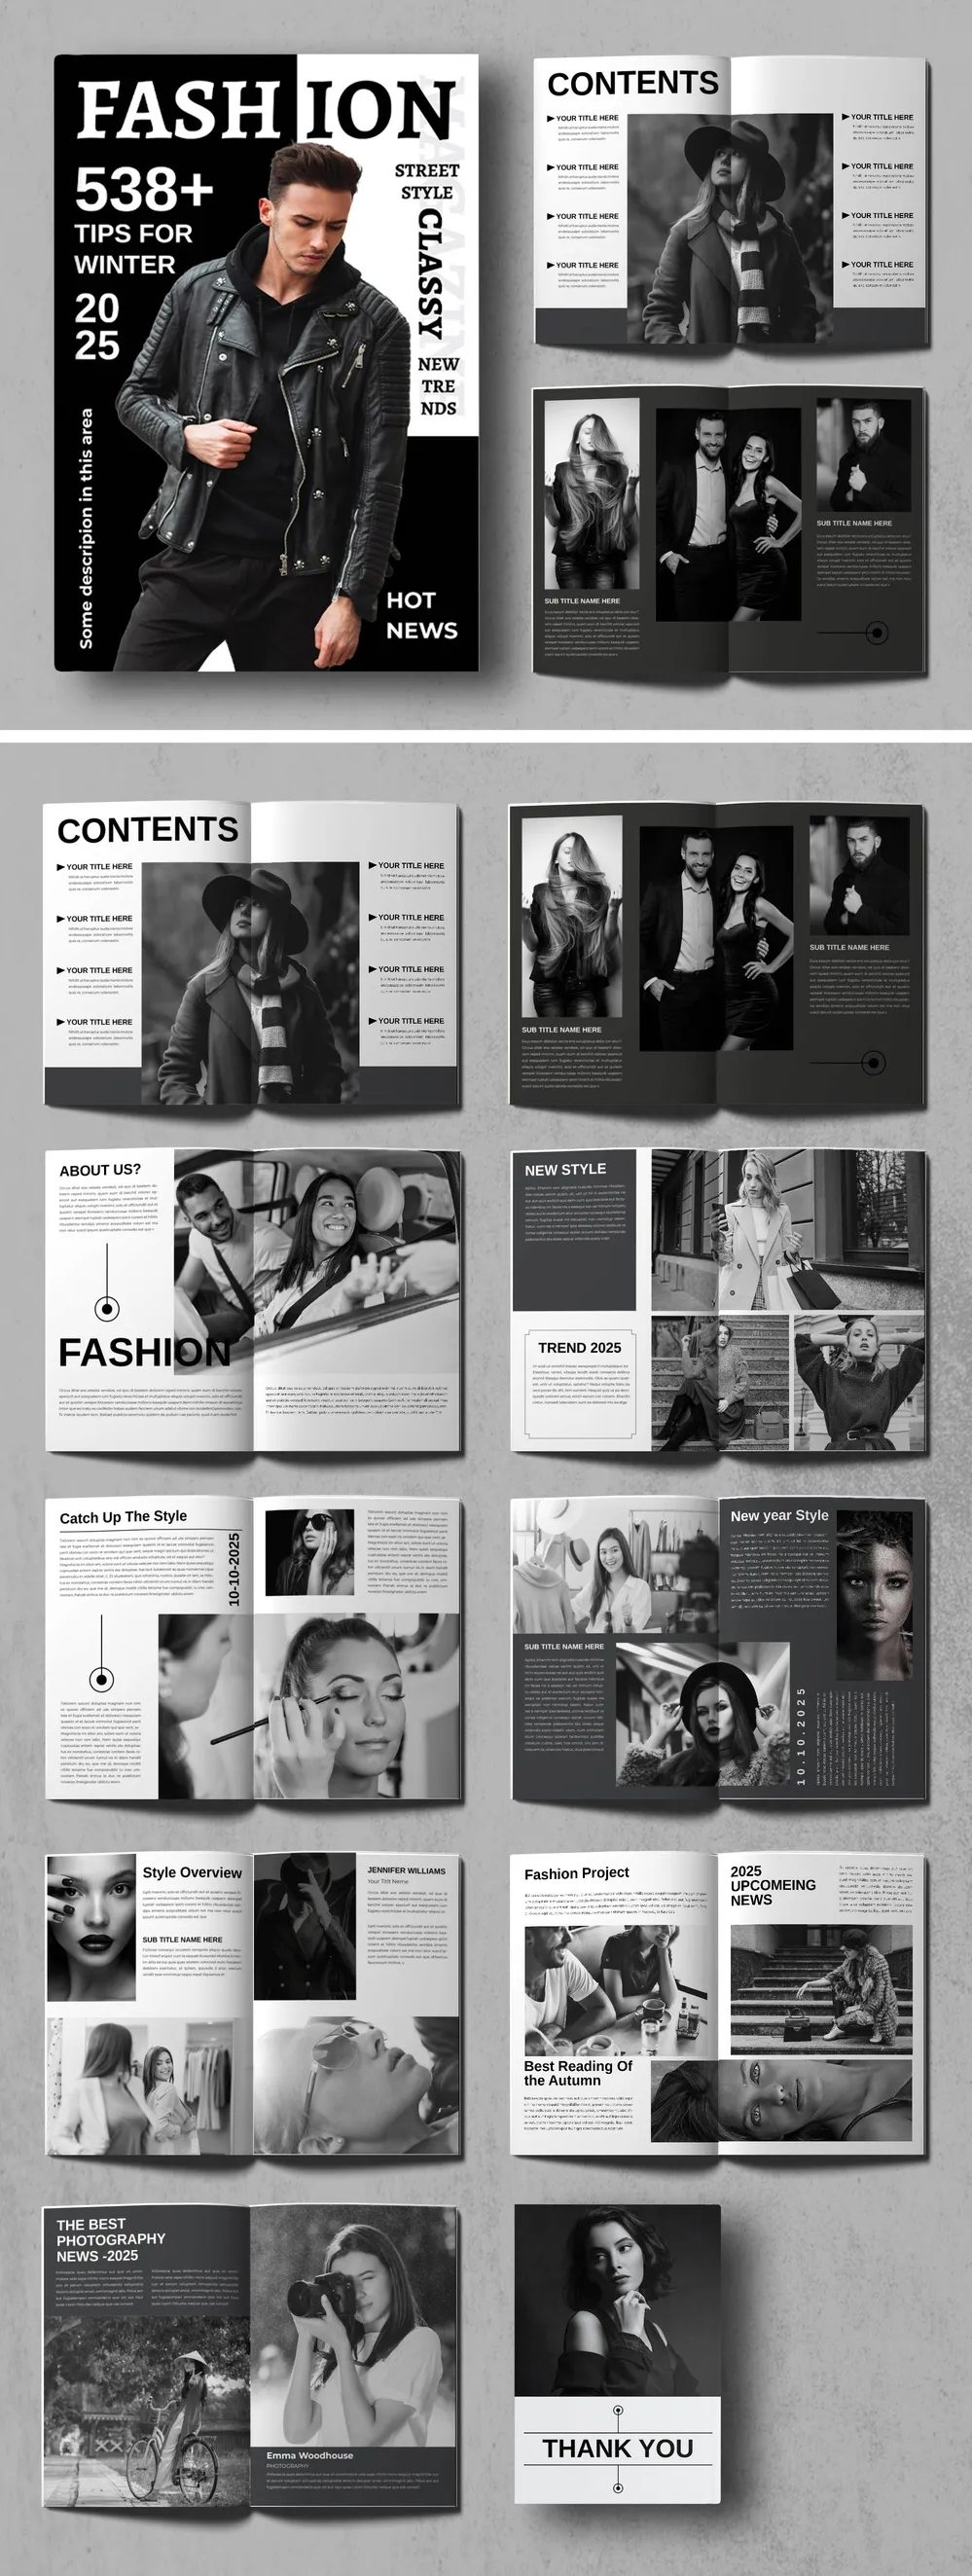 Adobestock - Fashion Magazine Design Layout 718545663